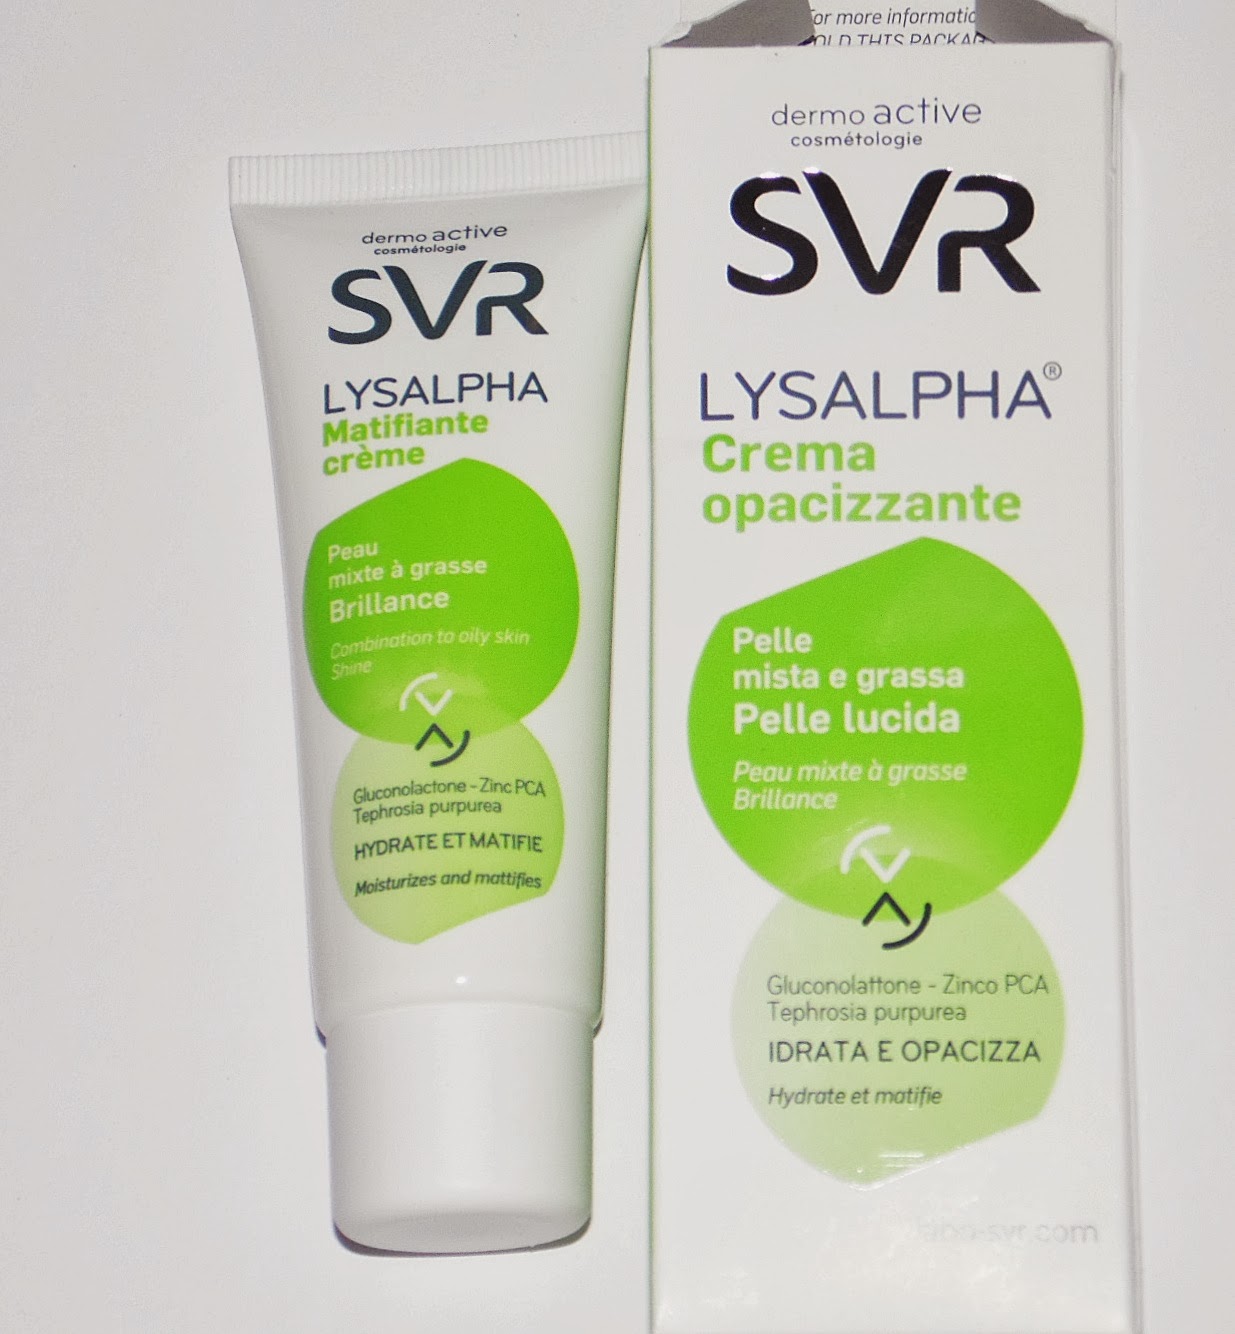 Svr gel. All inclusive крем матирующий. Крем для жирной кожи лица SVR. Матирующий крем modo.